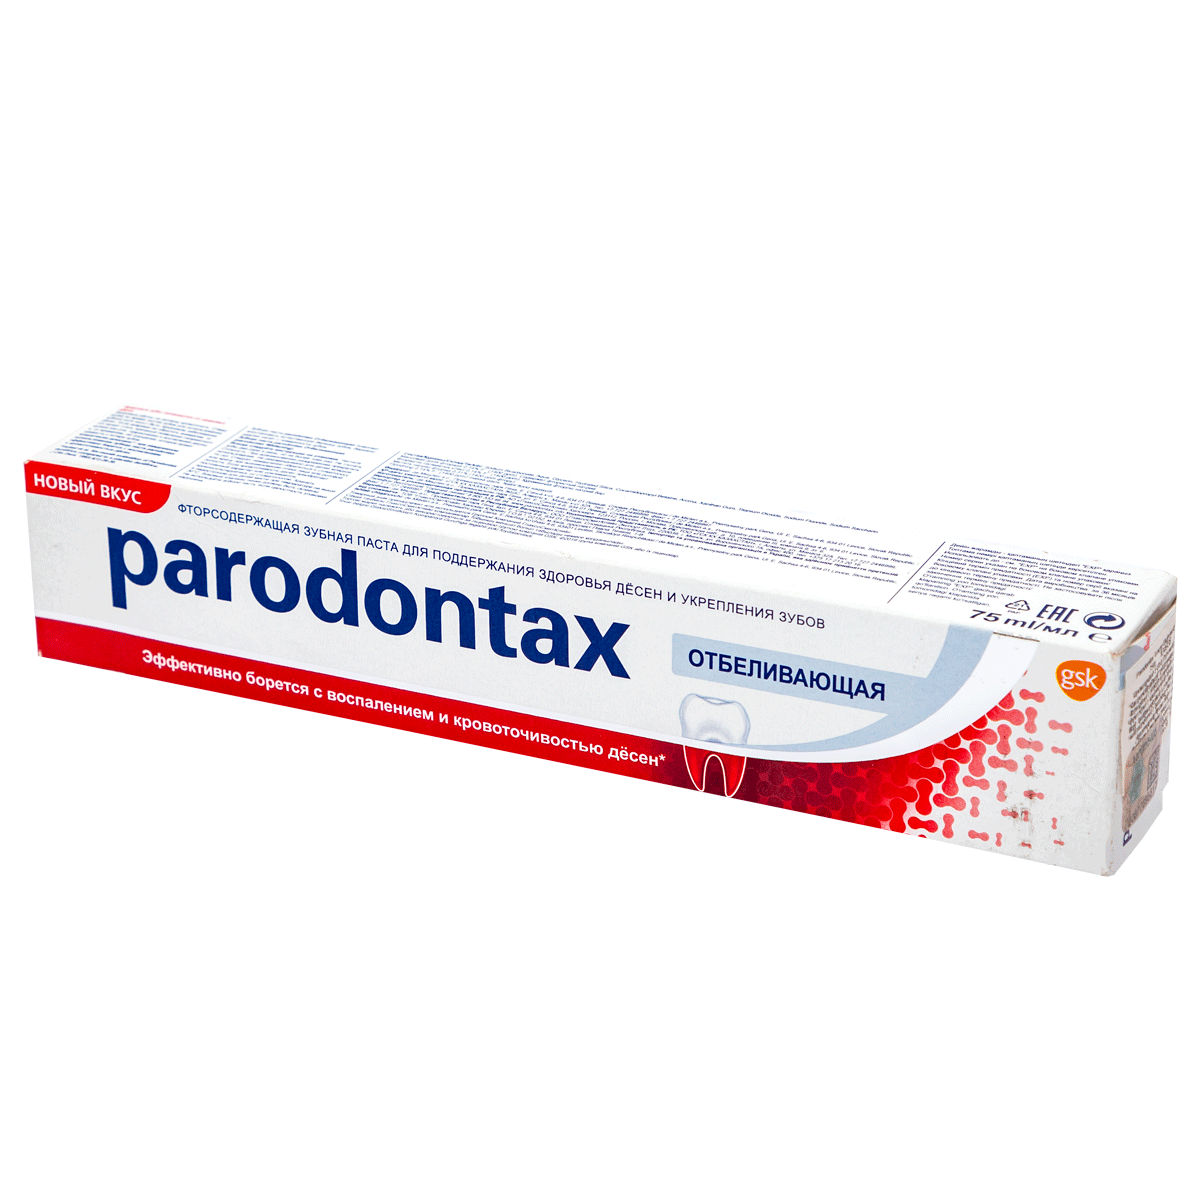 Ատամի մածուկ parodontax  